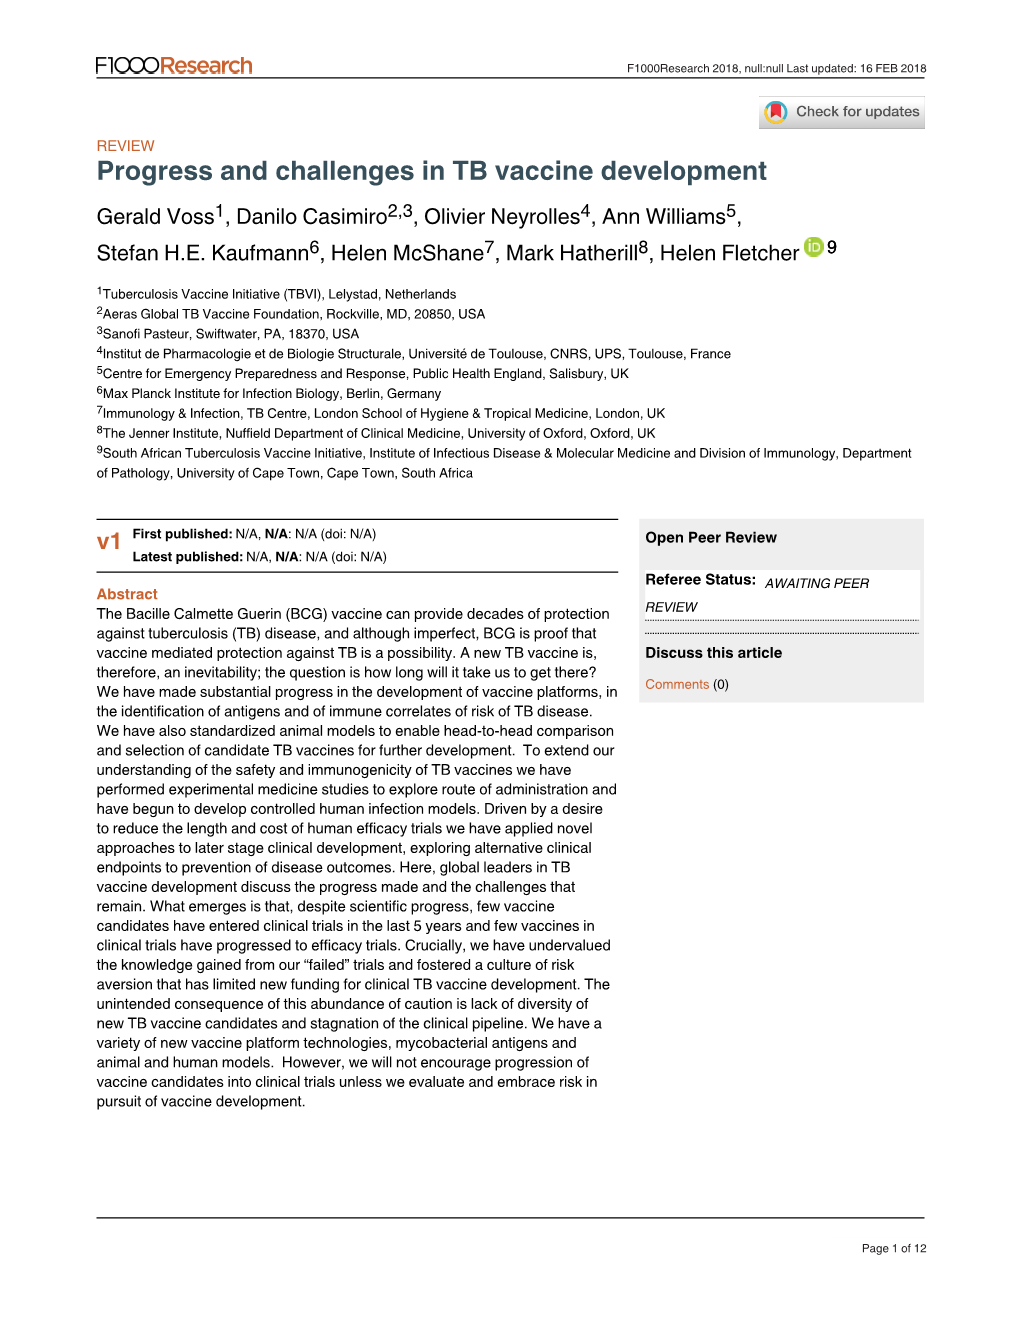 Progress and Challenges in TB Vaccine Development Gerald Voss1, Danilo Casimiro2,3, Olivier Neyrolles4, Ann Williams5, Stefan H.E